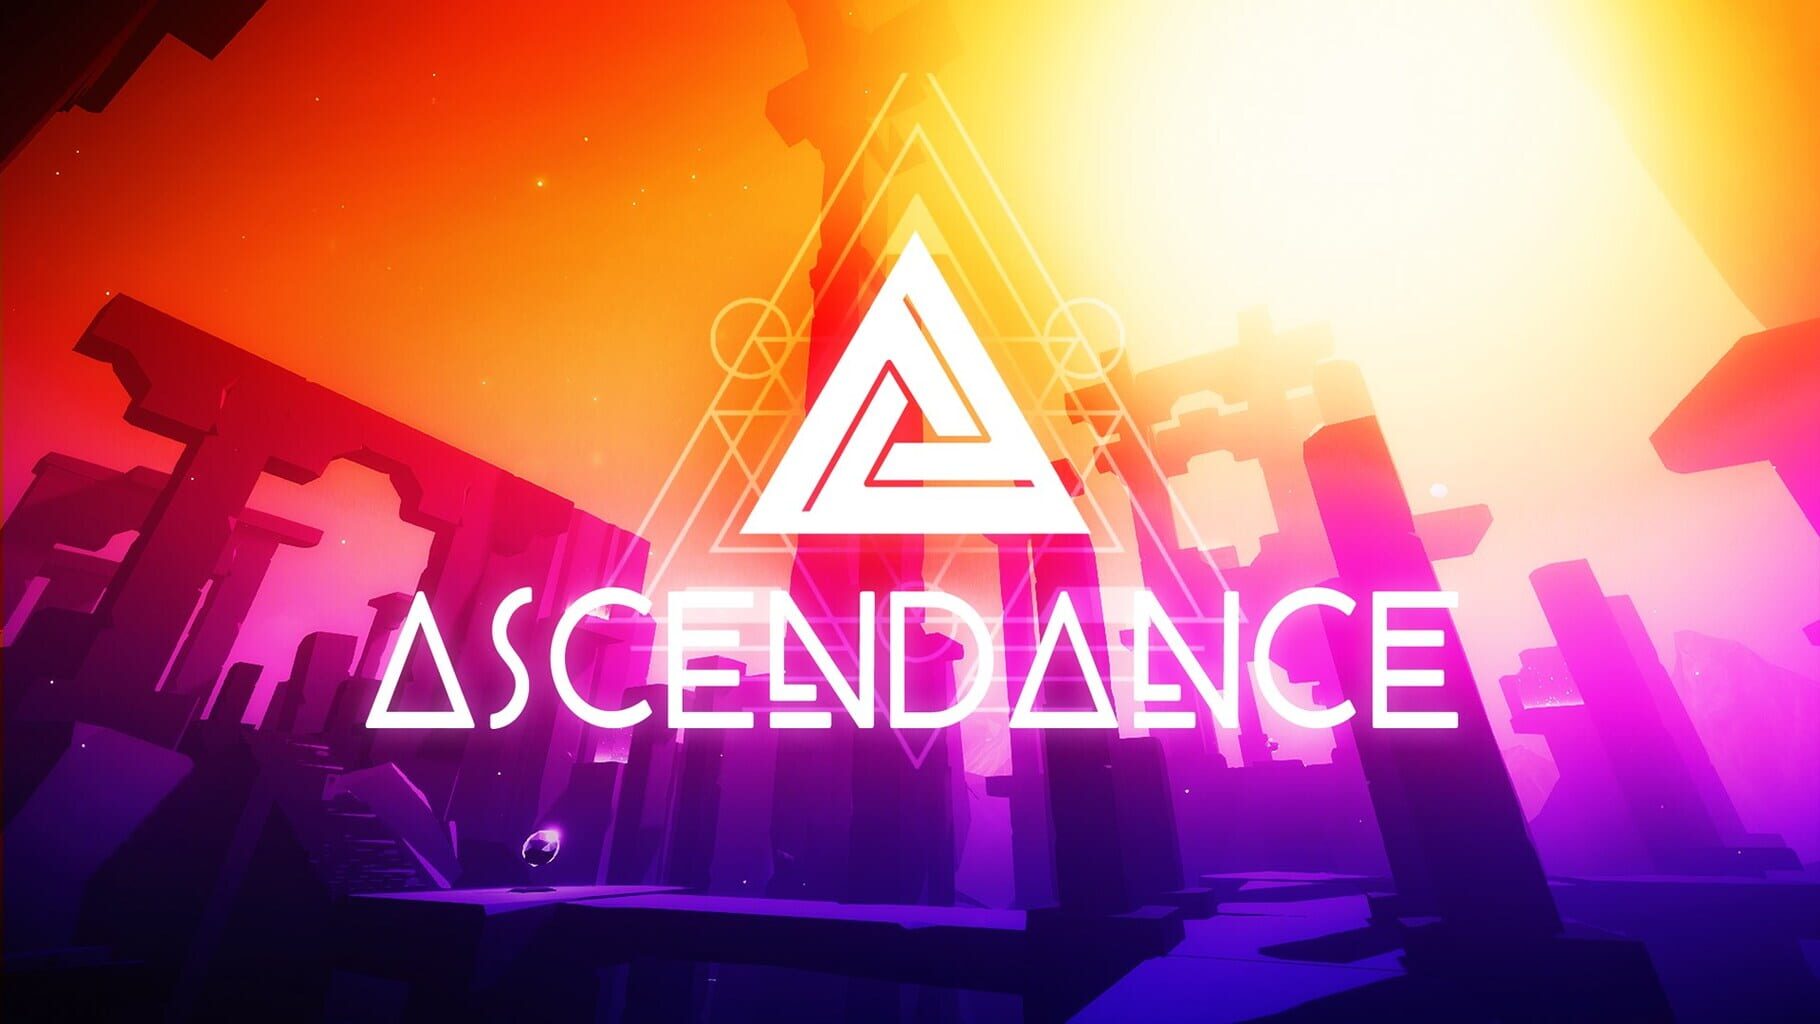 Ascendance artwork